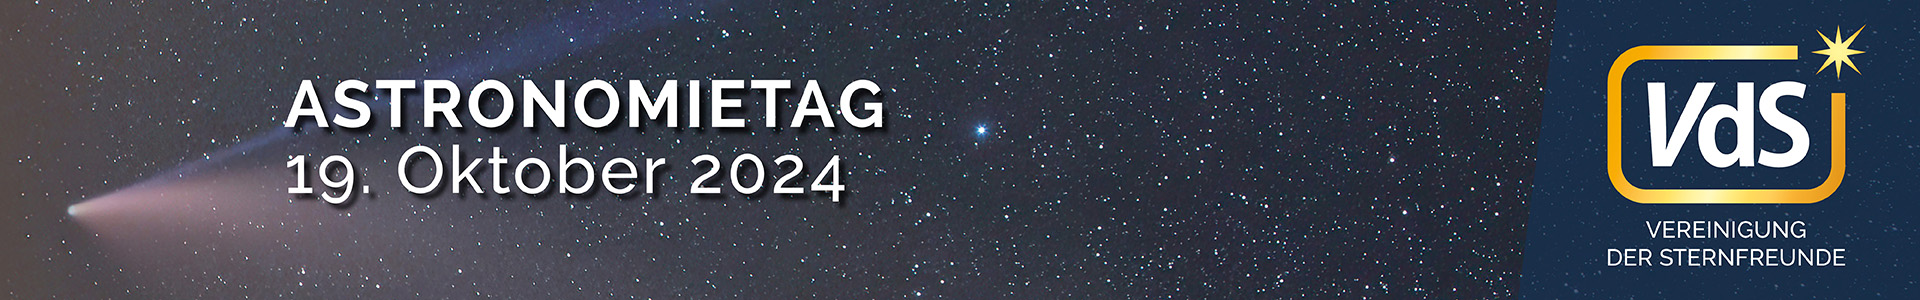 [Bild: VdS_Astronomietag-2024_Banner-VdS-WP-mit...20x300.jpg]